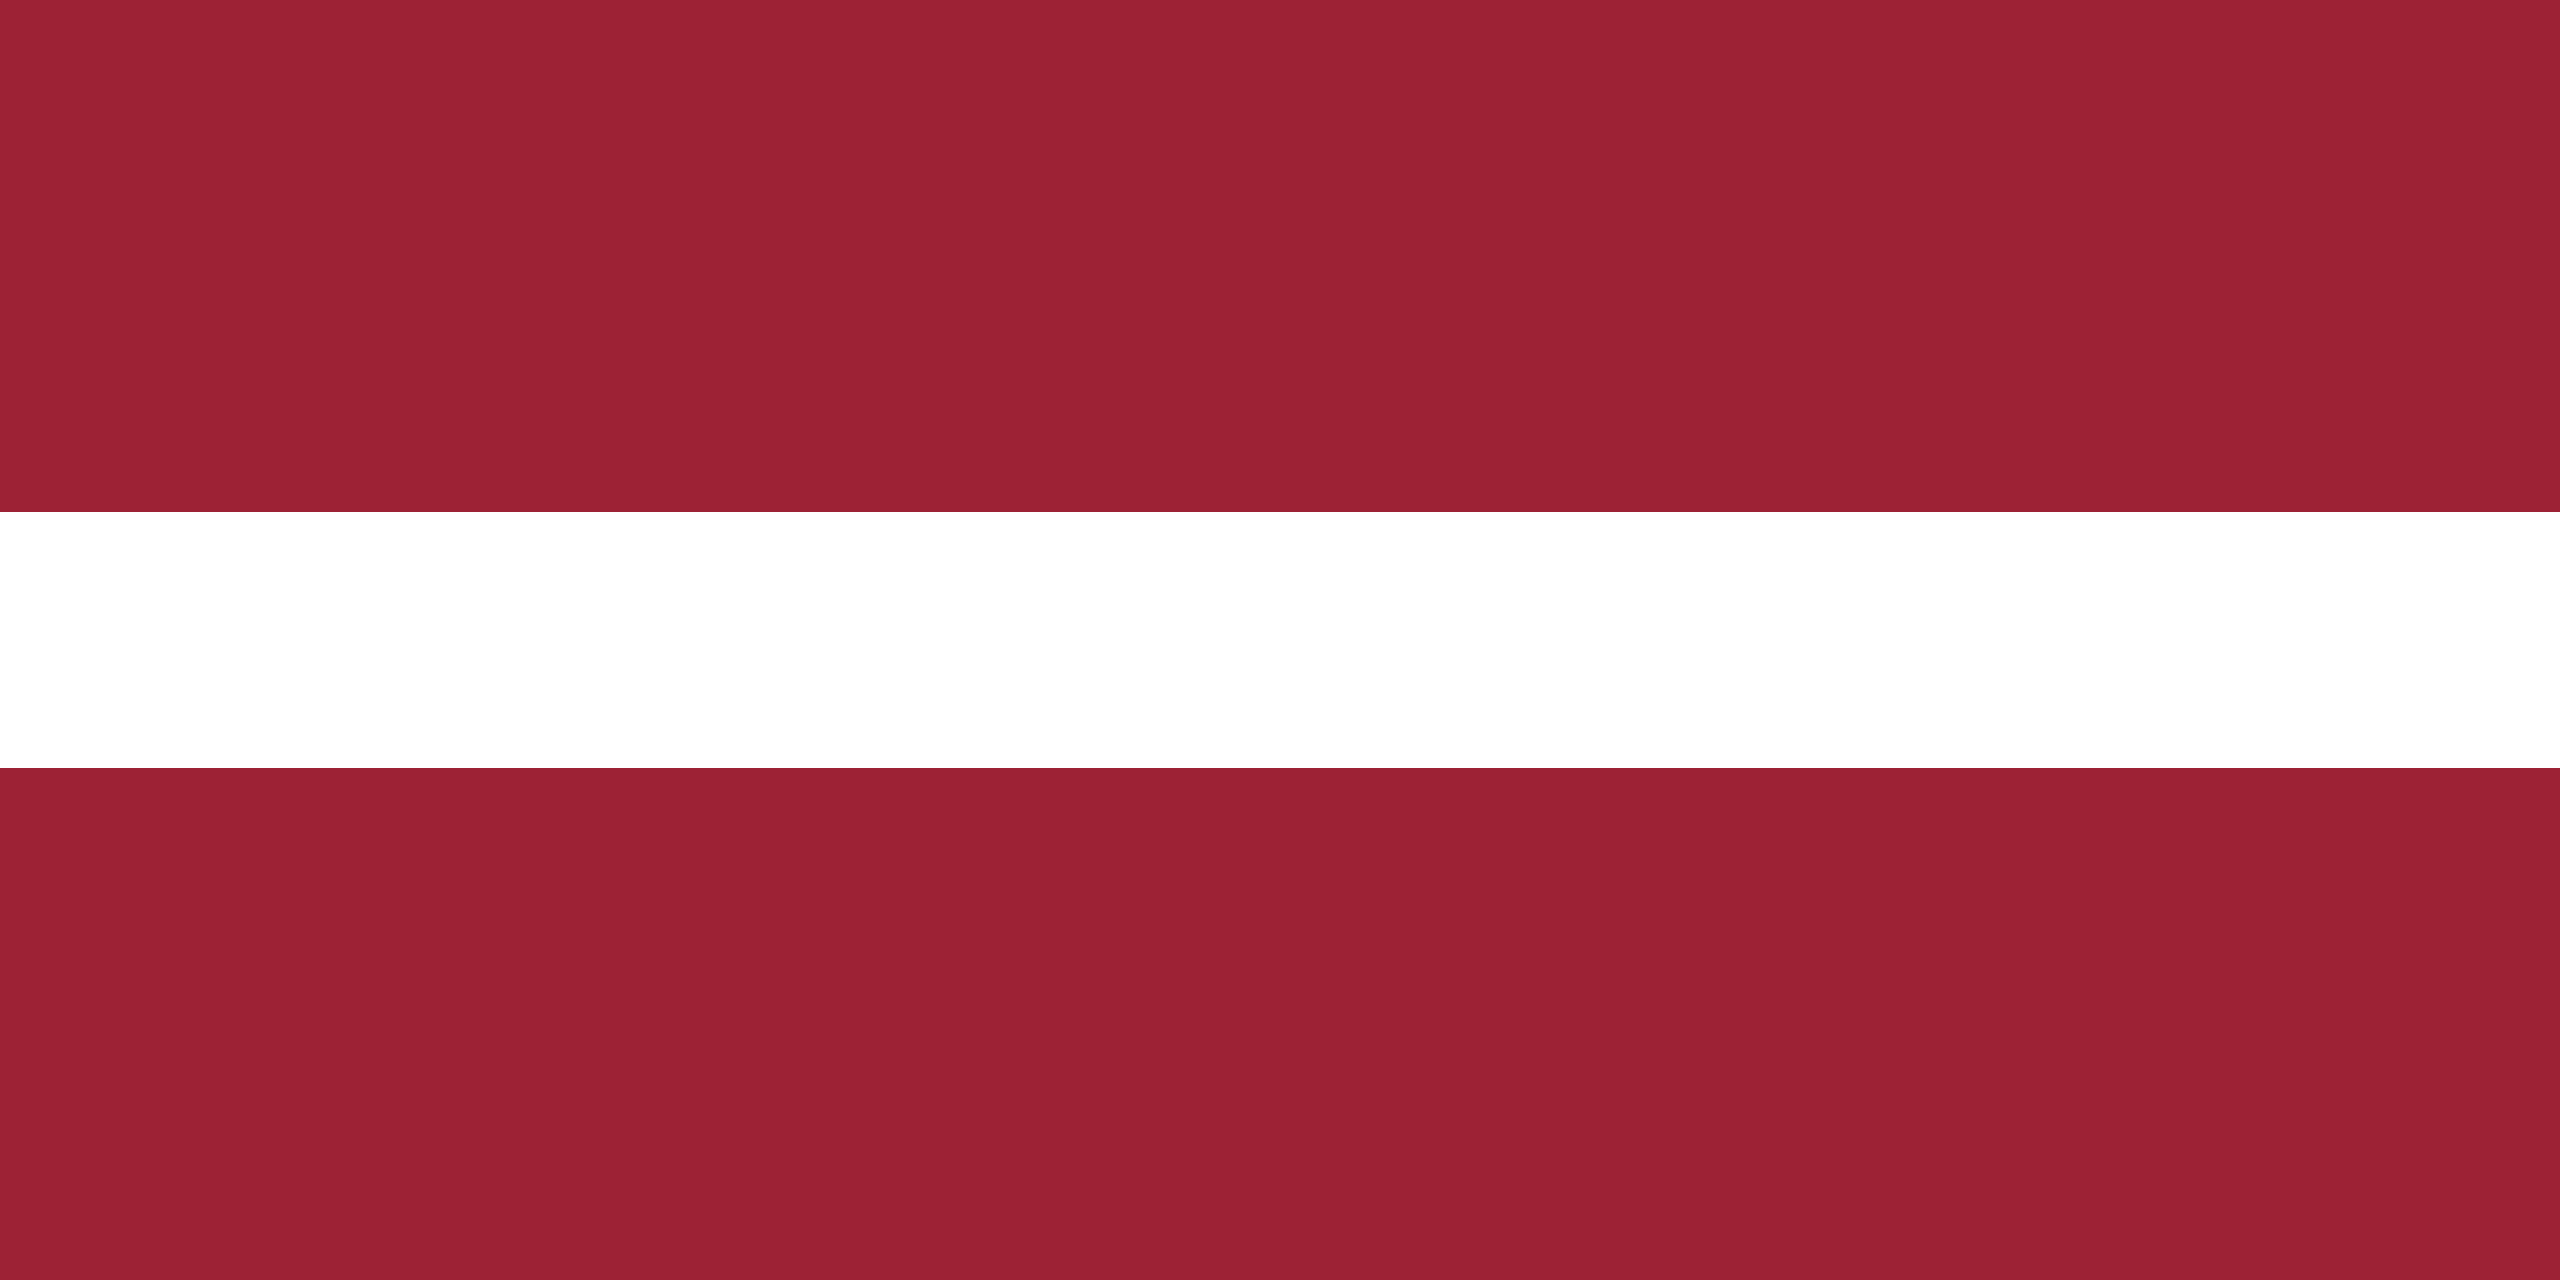 File:Flag of Latvia.svg - Wikimedia Commons